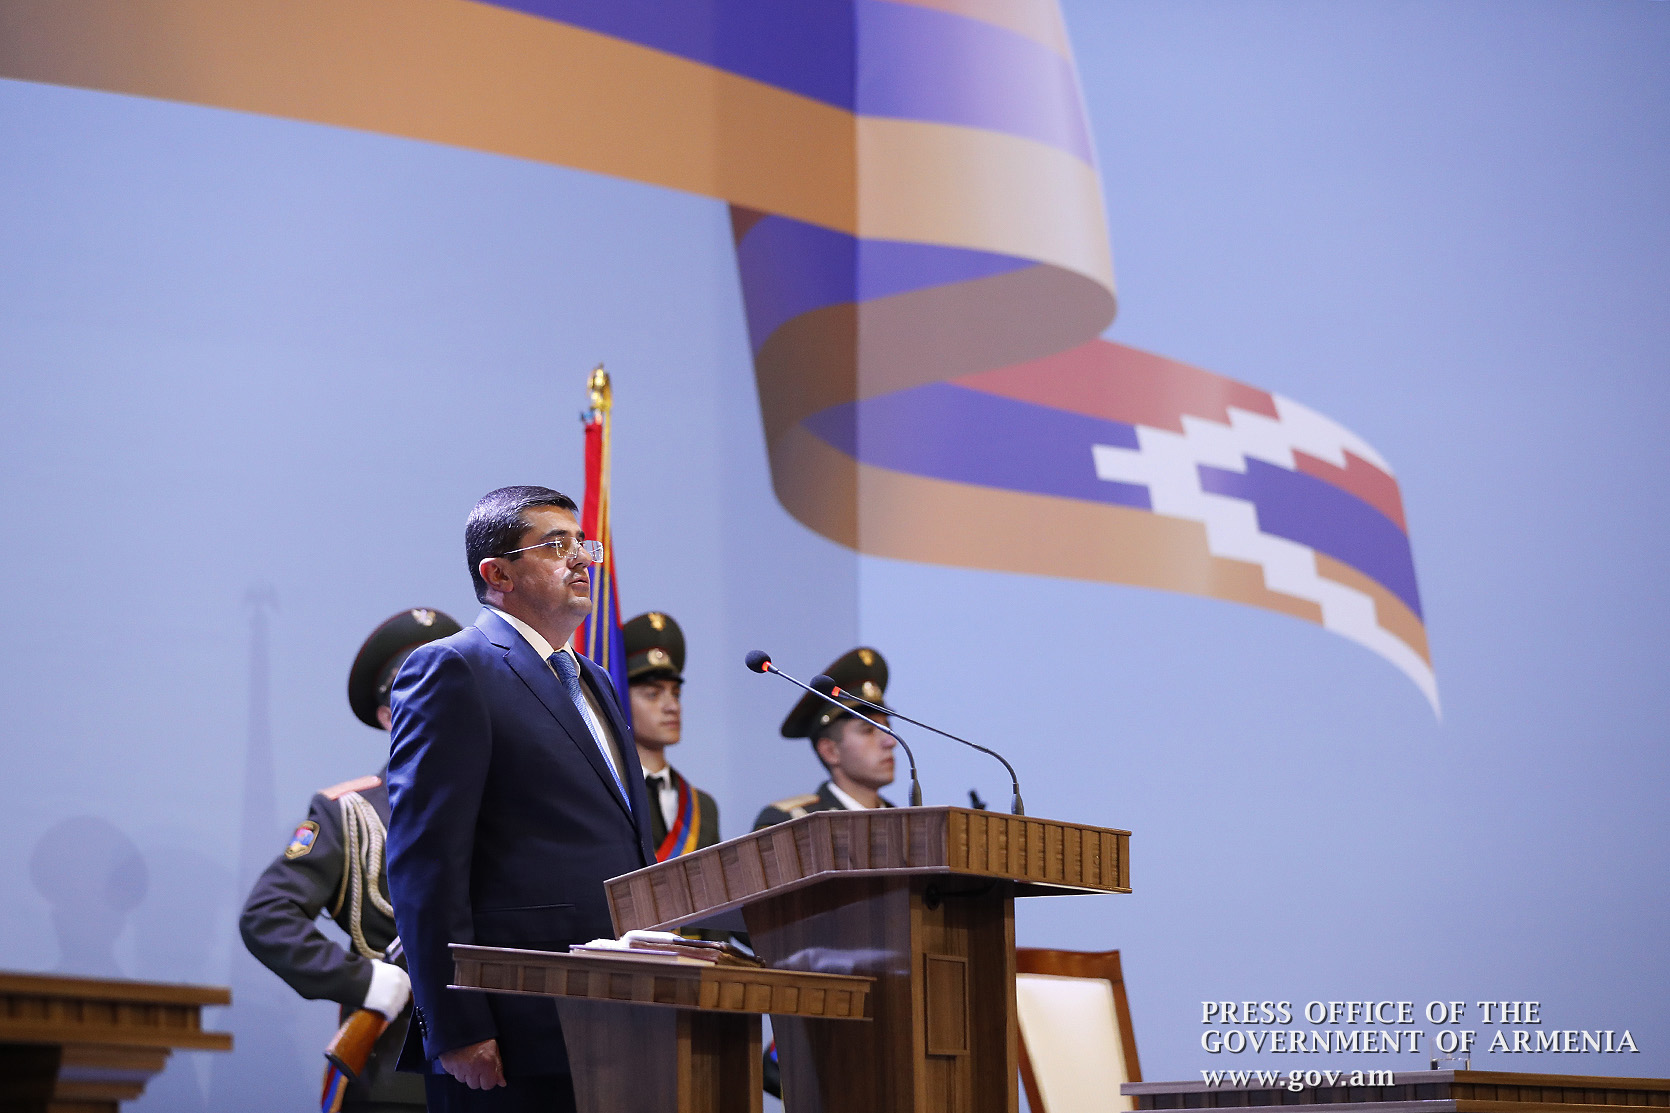 Karabakh leadership meets amid mounting concerns over Pashinyan peace plan